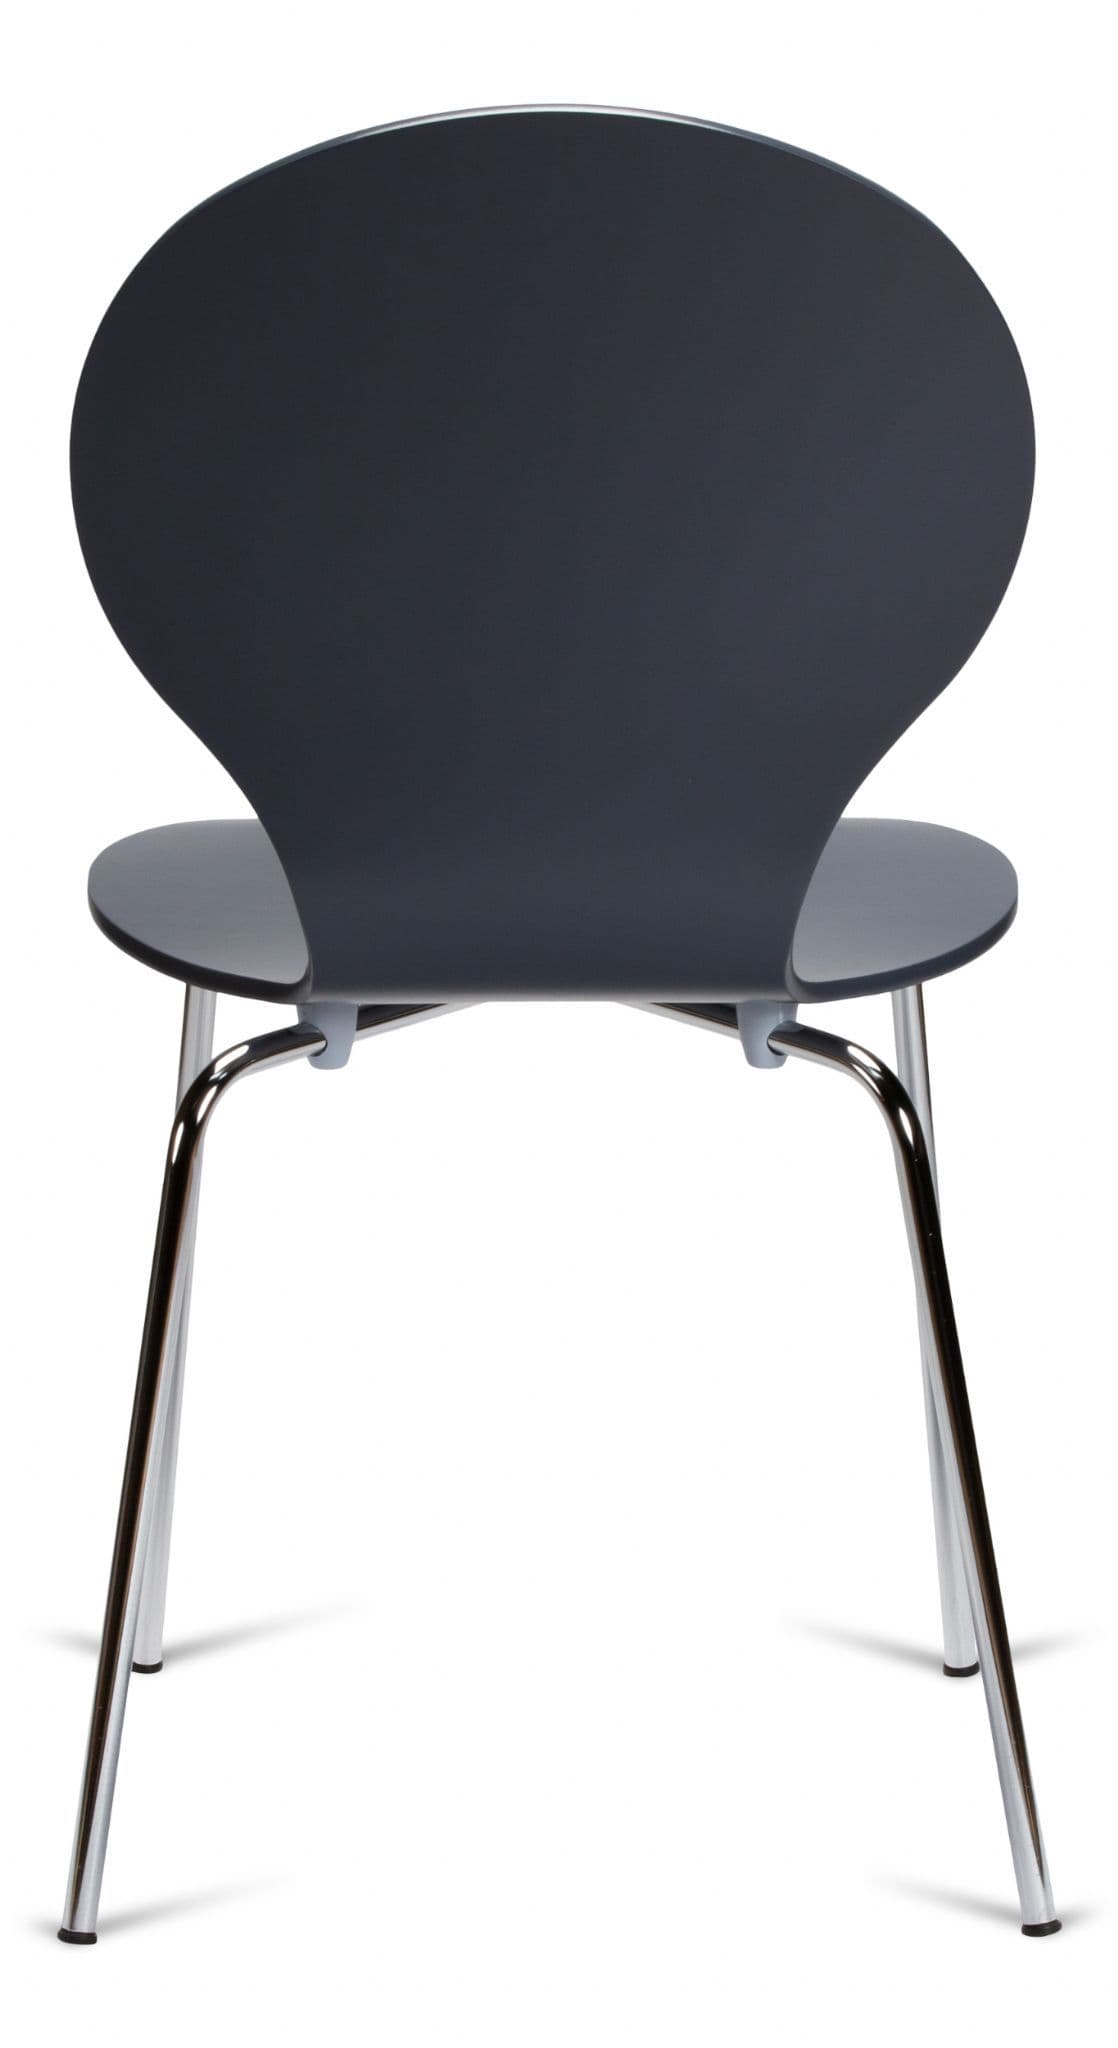 Kimberley Slate Grey & Chrome Dining Chairs Rear View